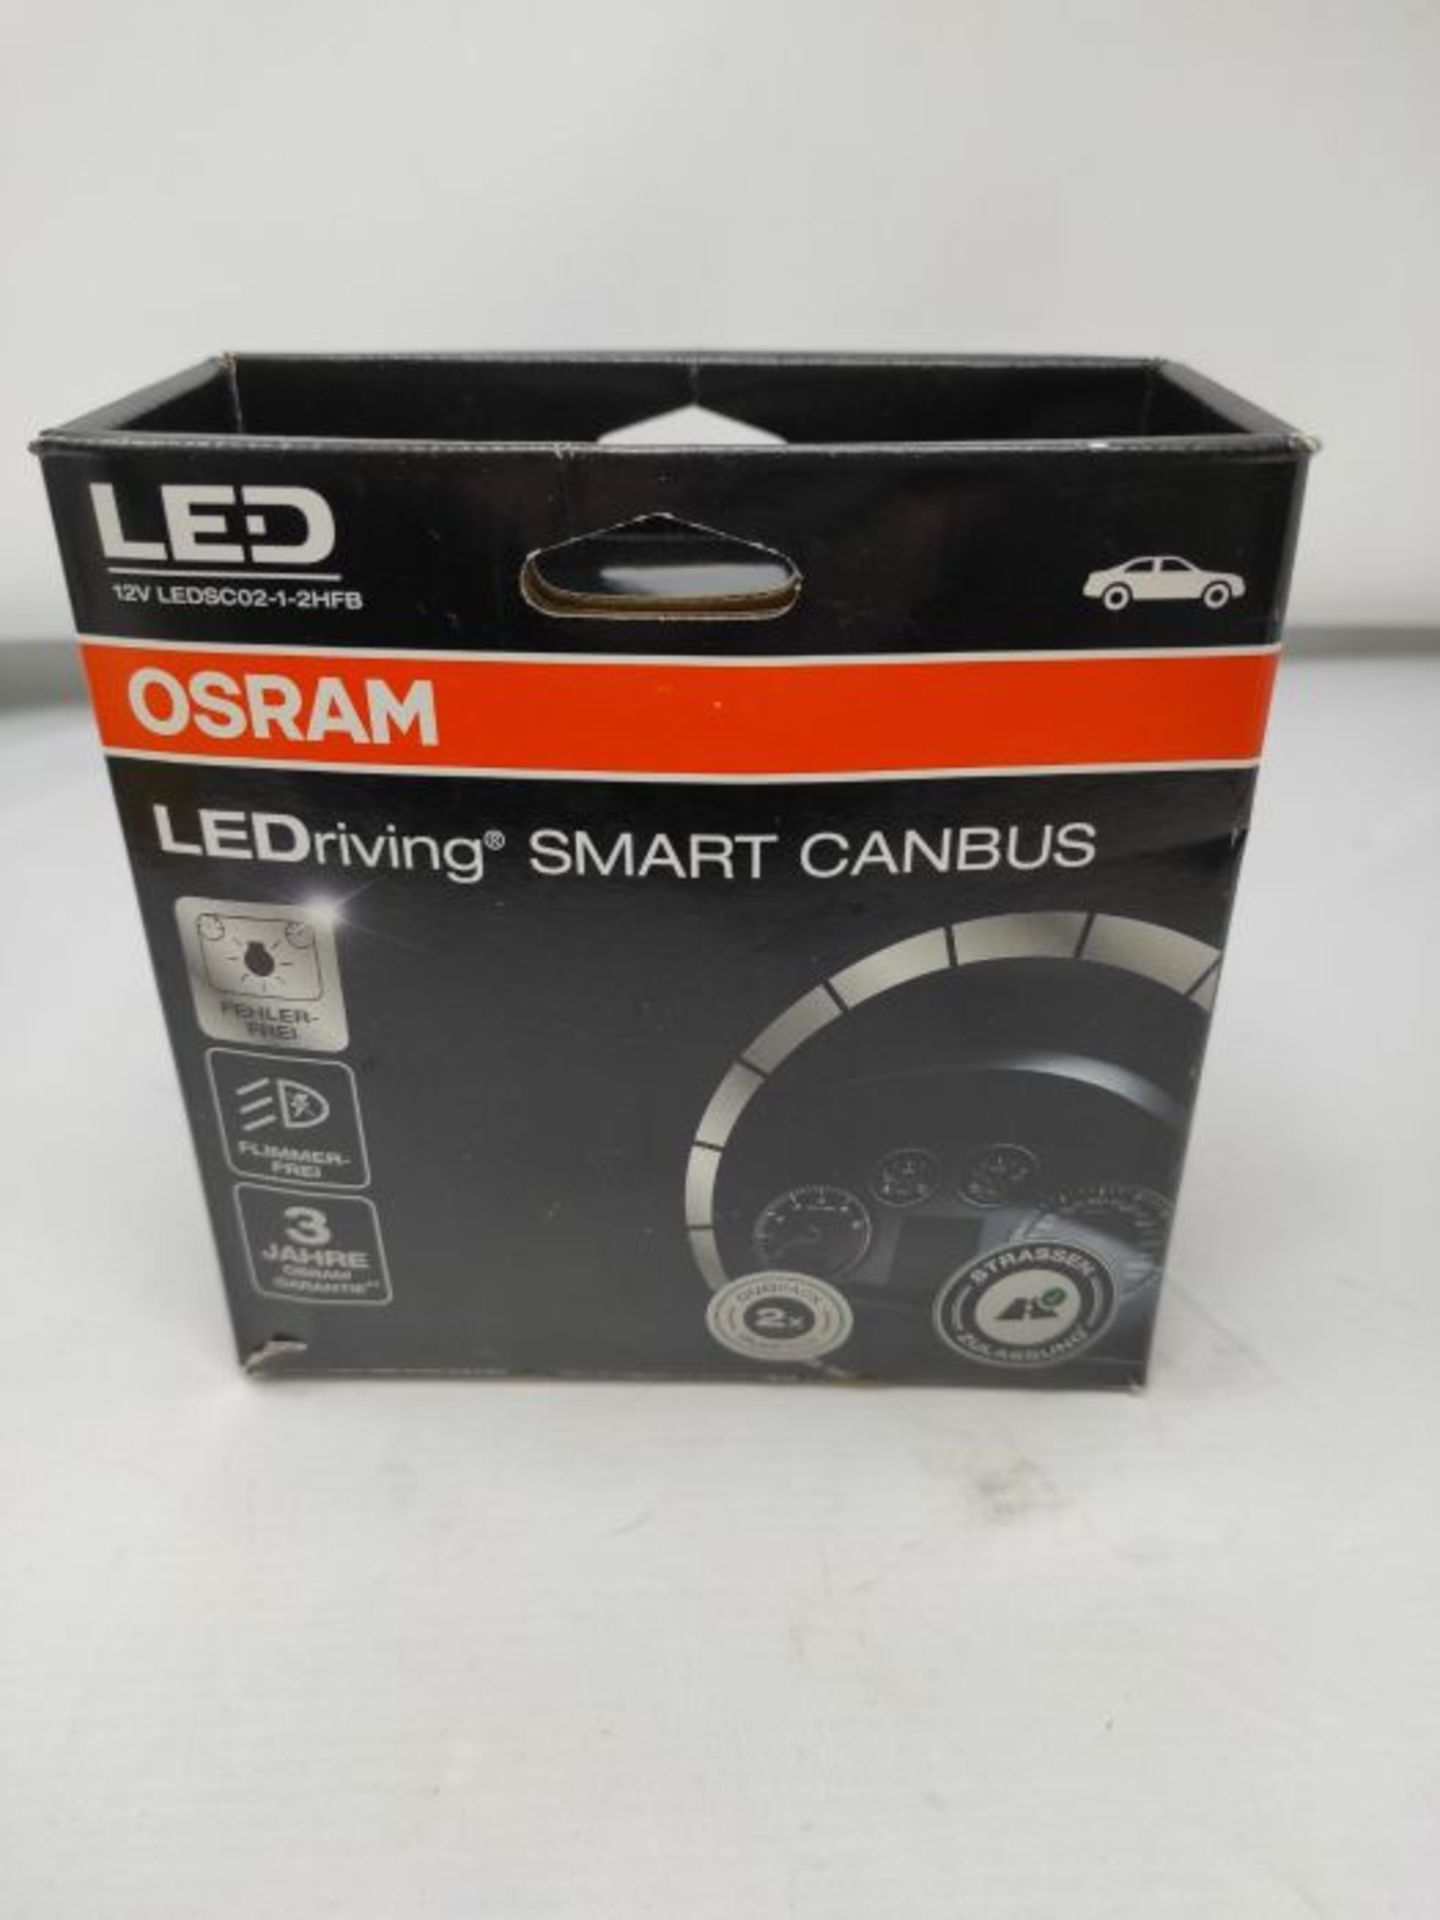 RRP £53.00 OSRAM LEDriving SMART CANBUS, LEDSC02-1, umgeht das Lampenausfallerkennungssystem Retr - Image 2 of 3